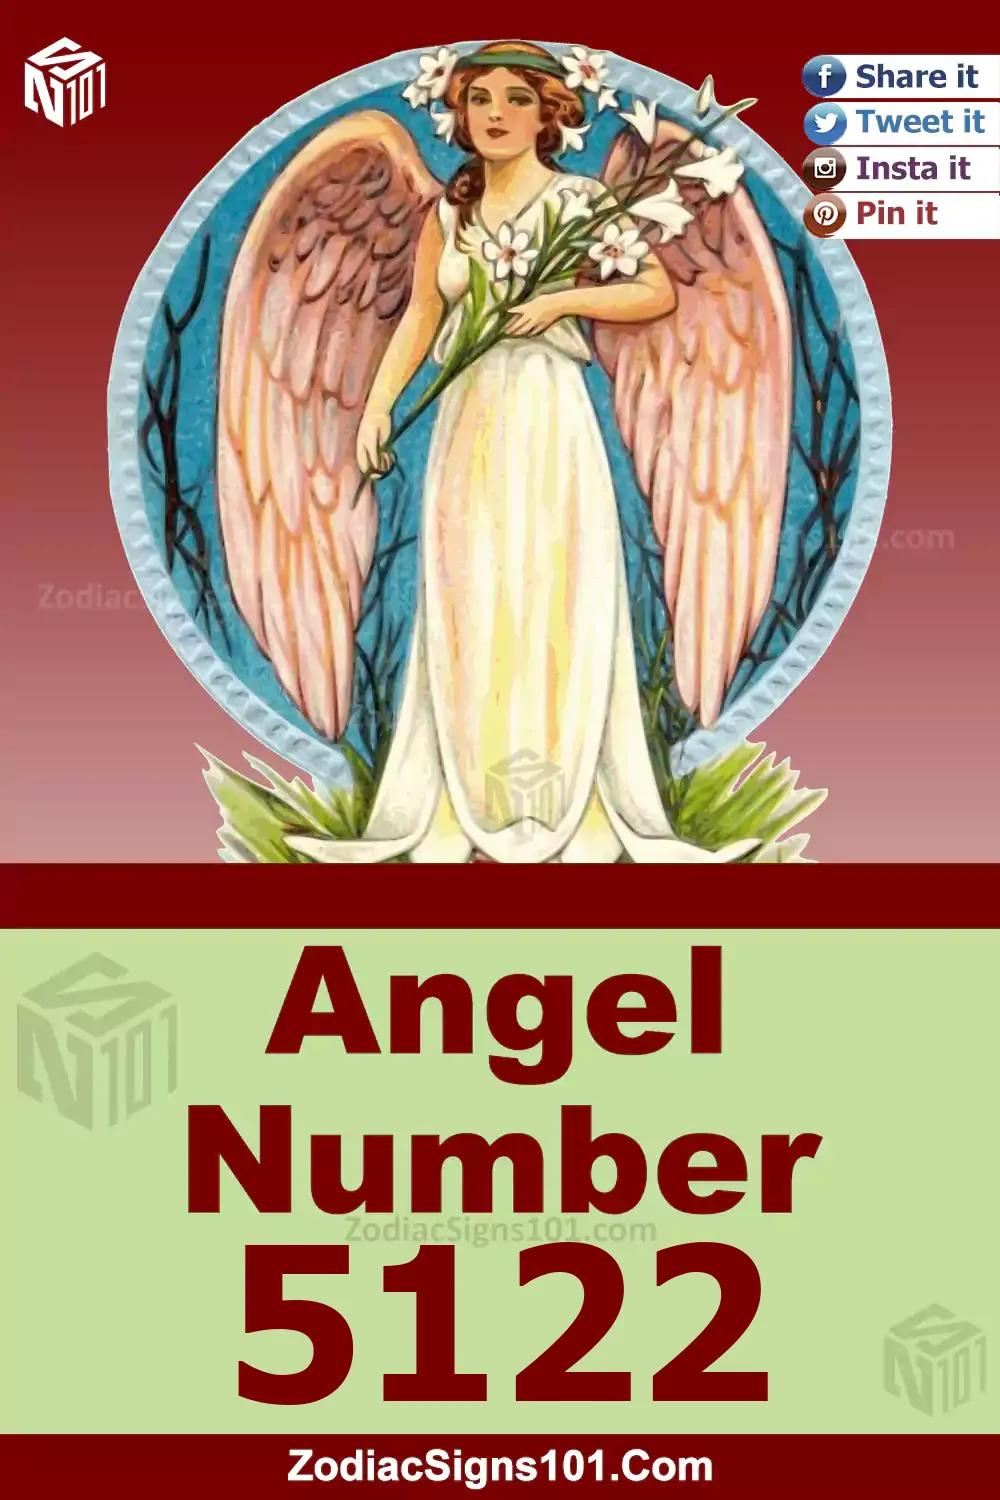 5122-Angel-Number-Meaning.jpg